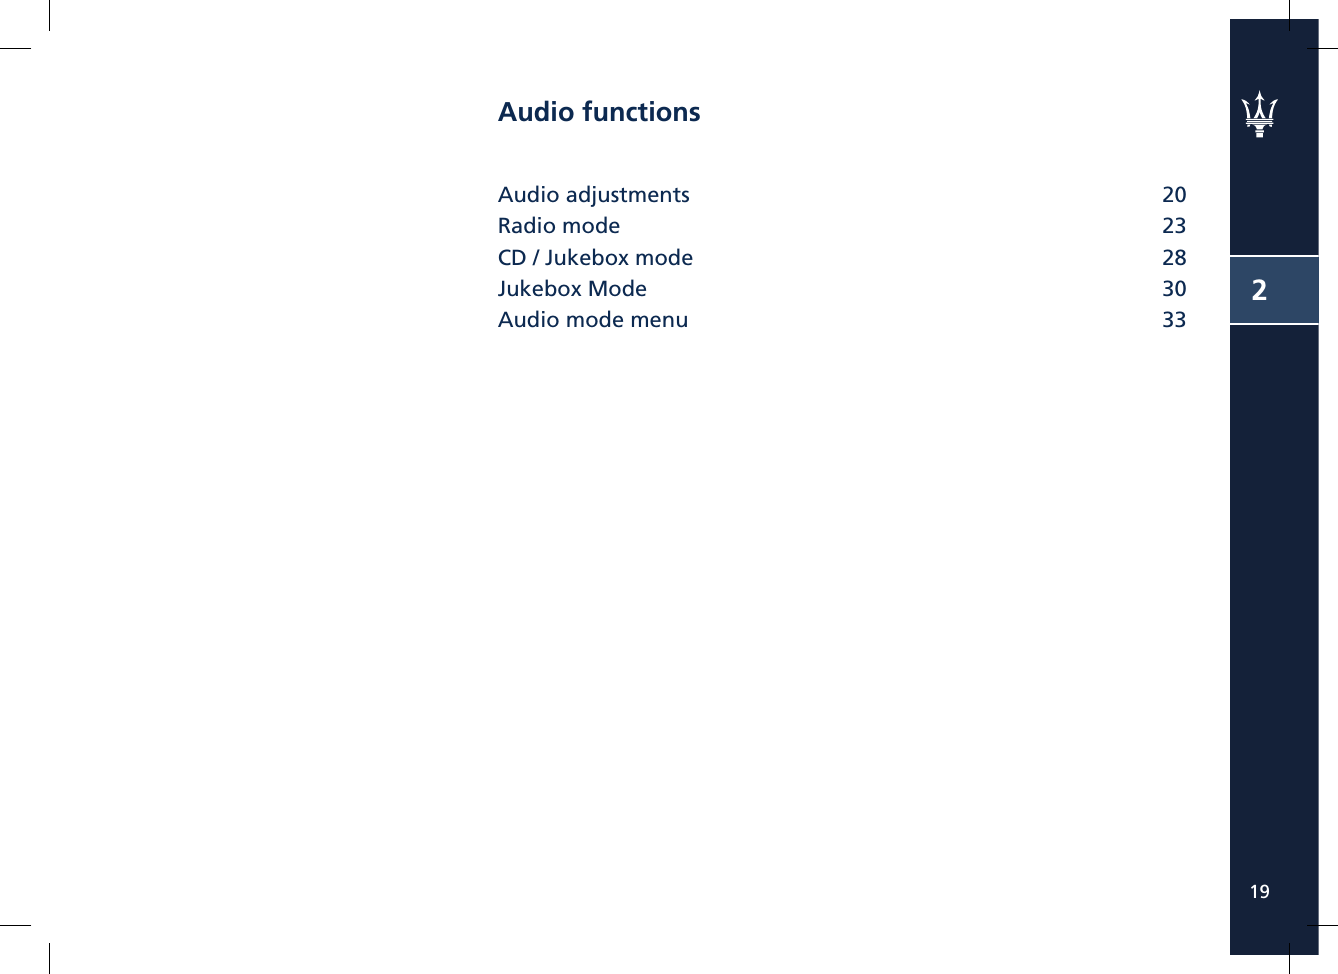 219Audio functions Audio adjustments  20Radio mode  23CD / Jukebox mode  28Jukebox Mode  30Audio mode menu  33